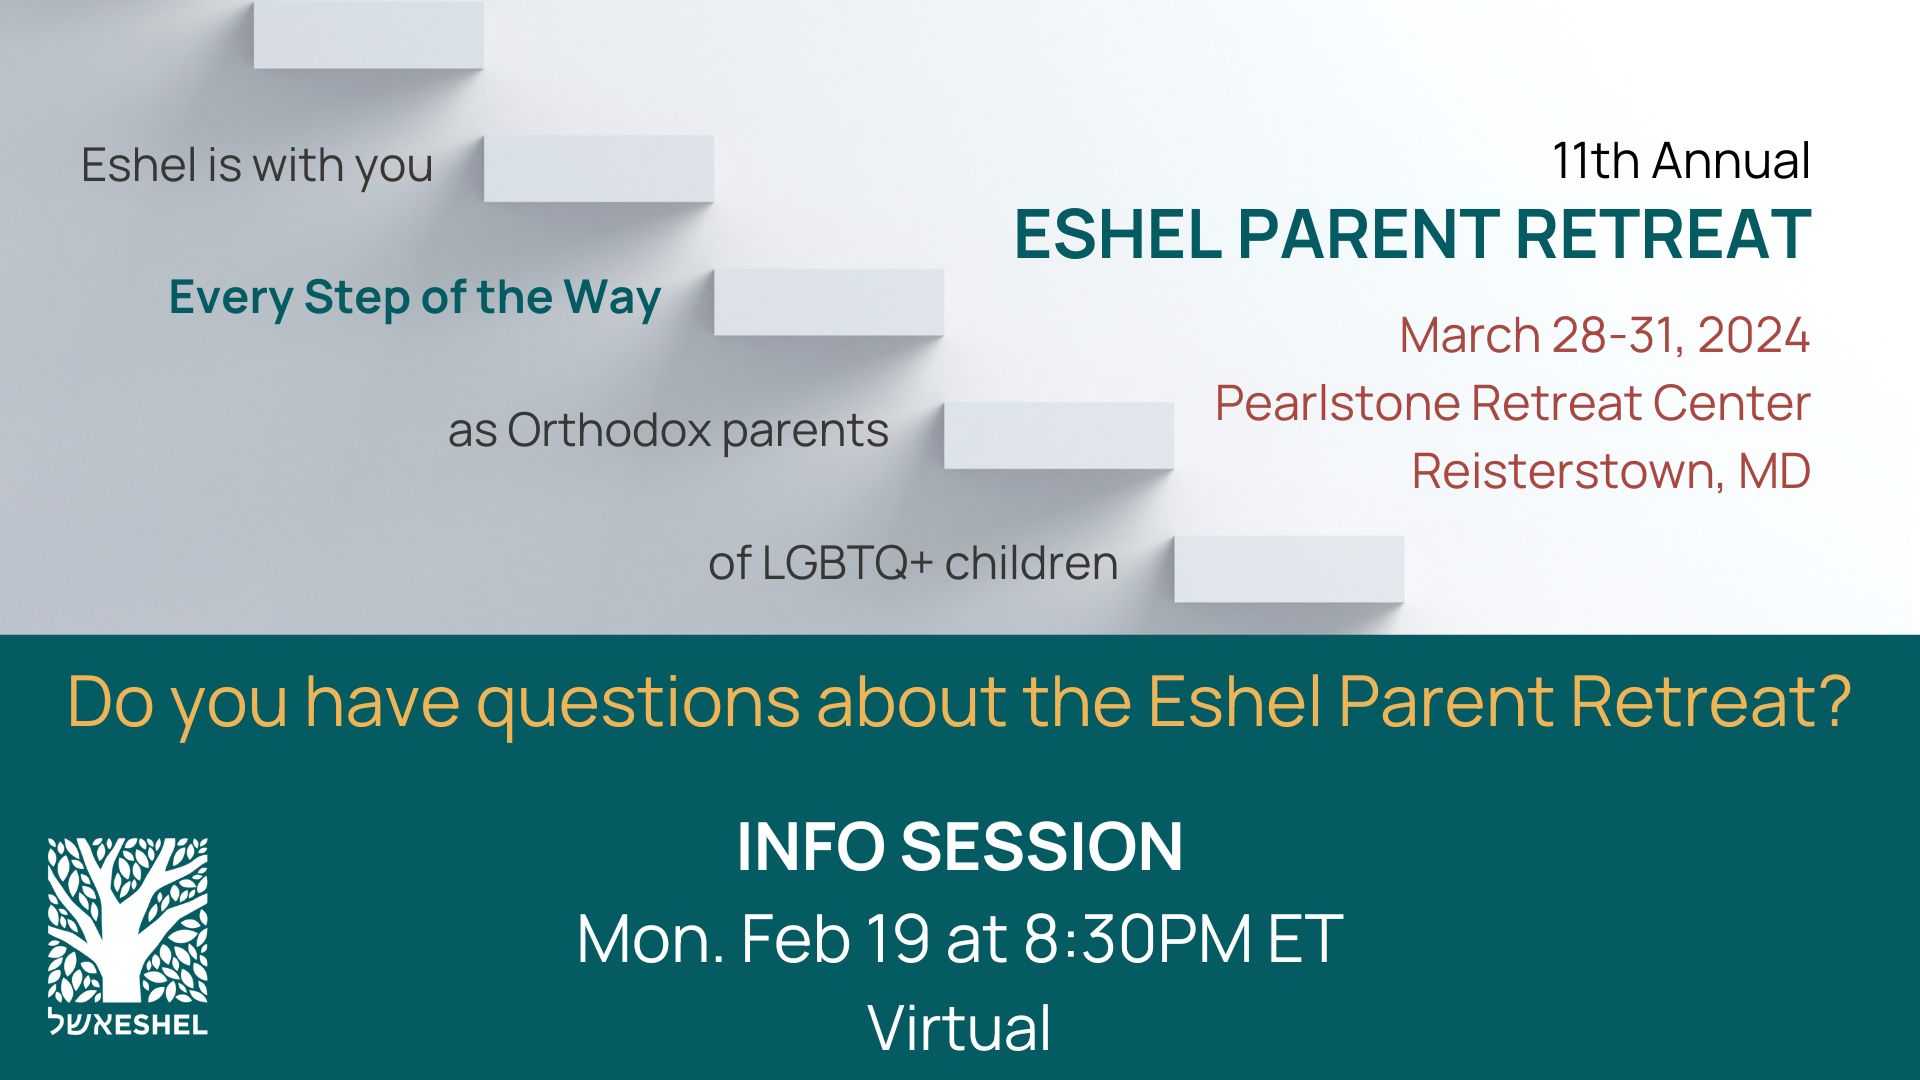 Do you have questions about the Eshel Parent Retreat? INFO SESSION - Tue. Feb 20 at 8:30 pm ET